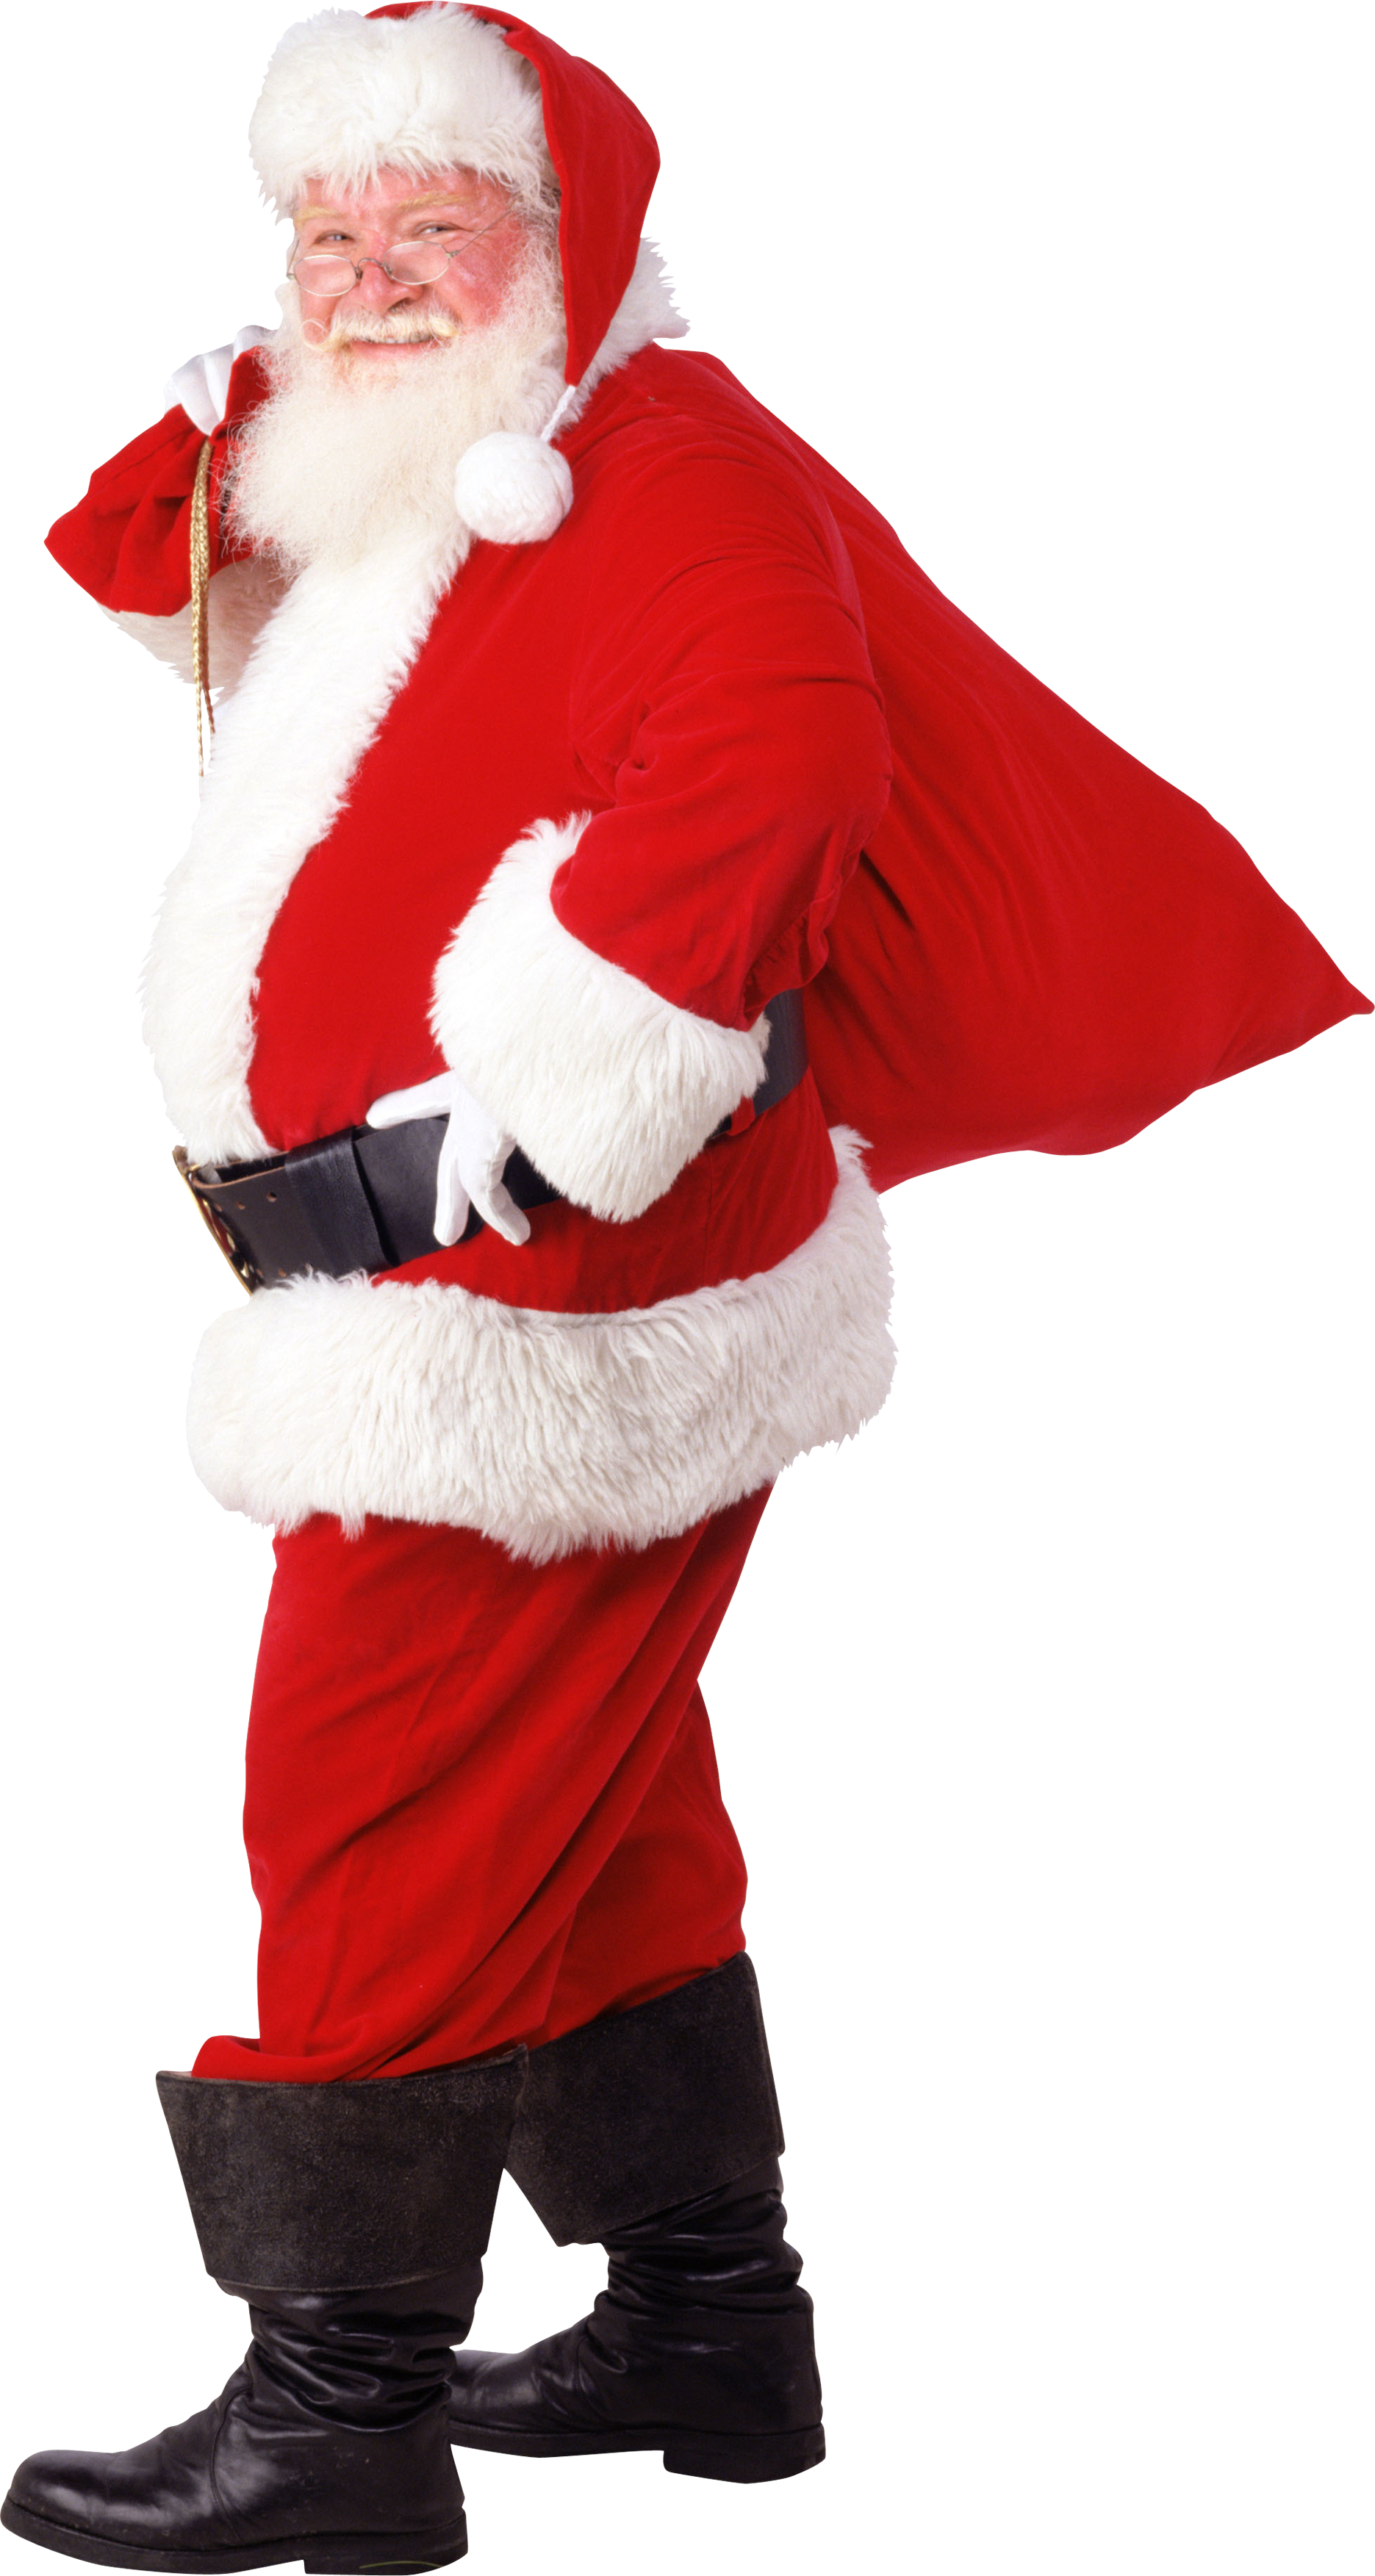 Santa Claus Png Image - Santa Claus, Transparent background PNG HD thumbnail